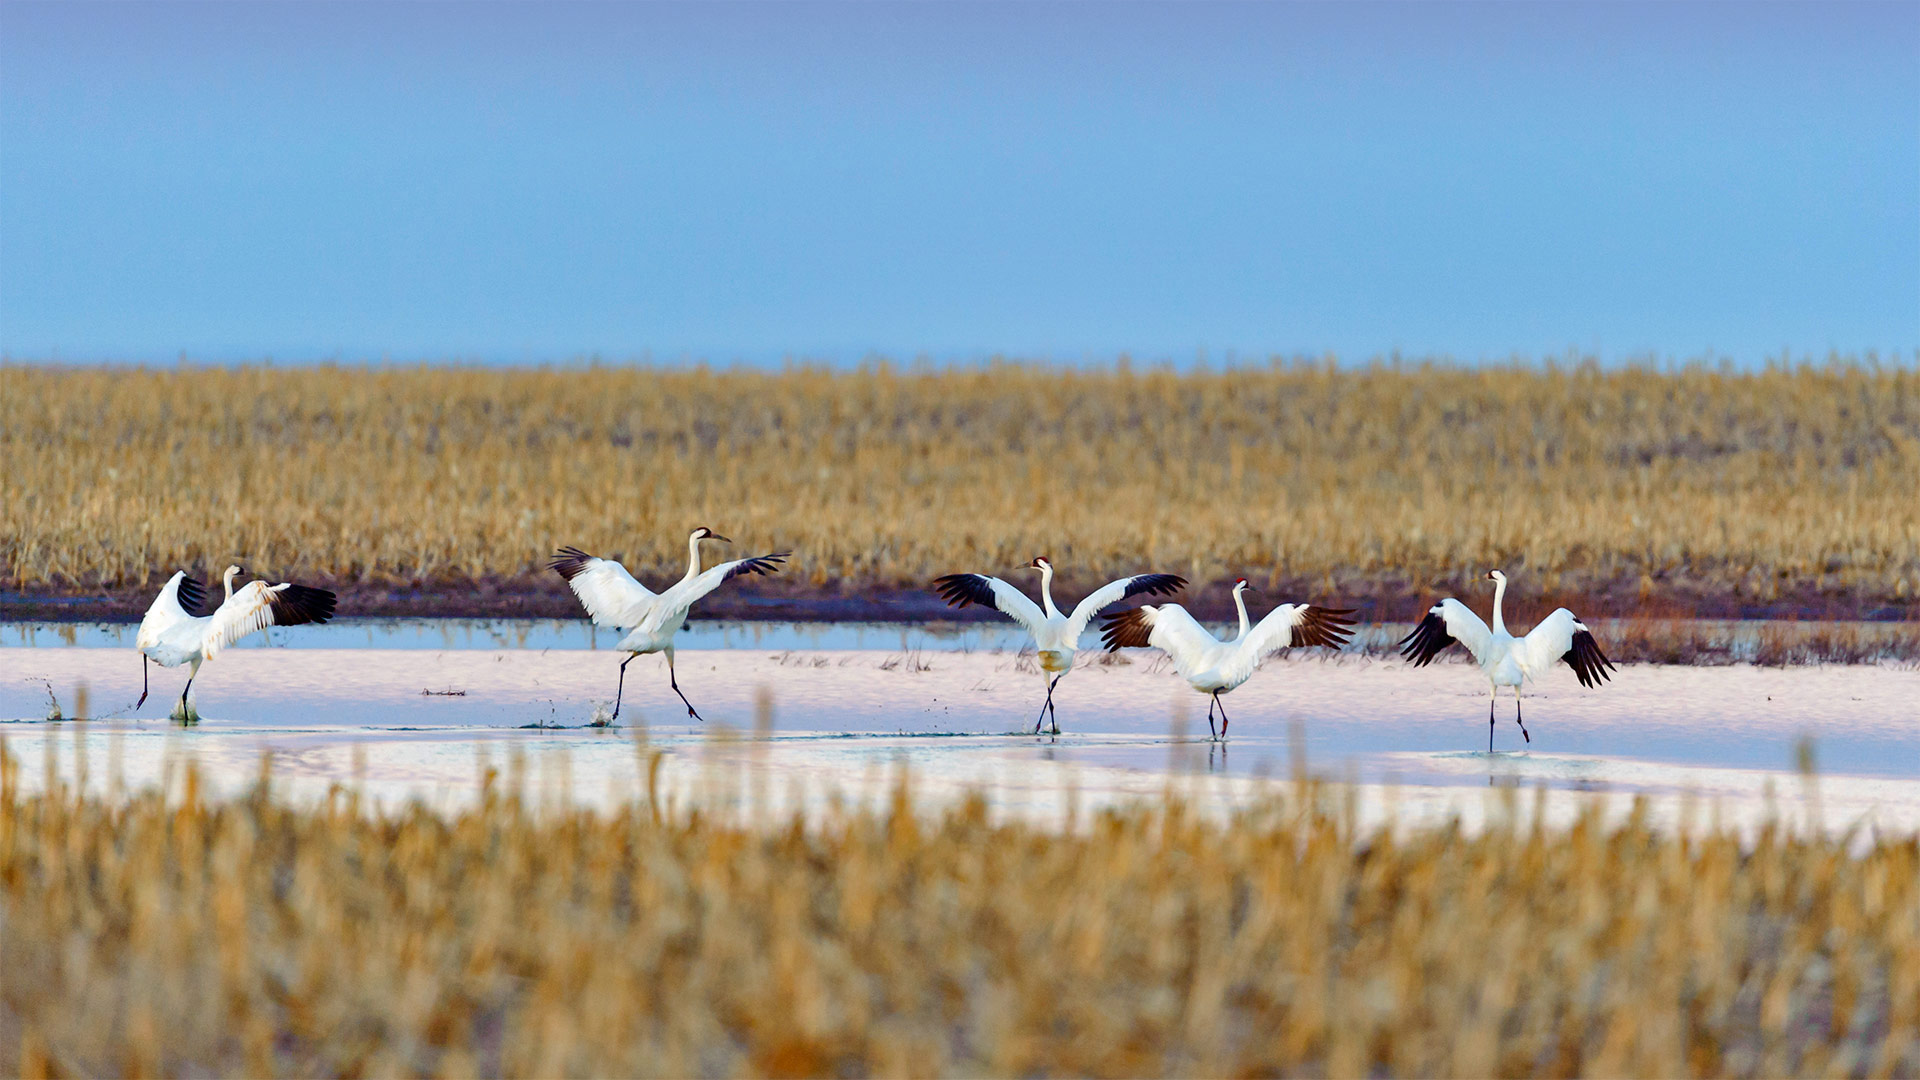 Whooping cranes taking off during spring migration in South Dakota - Gerrit Vyn